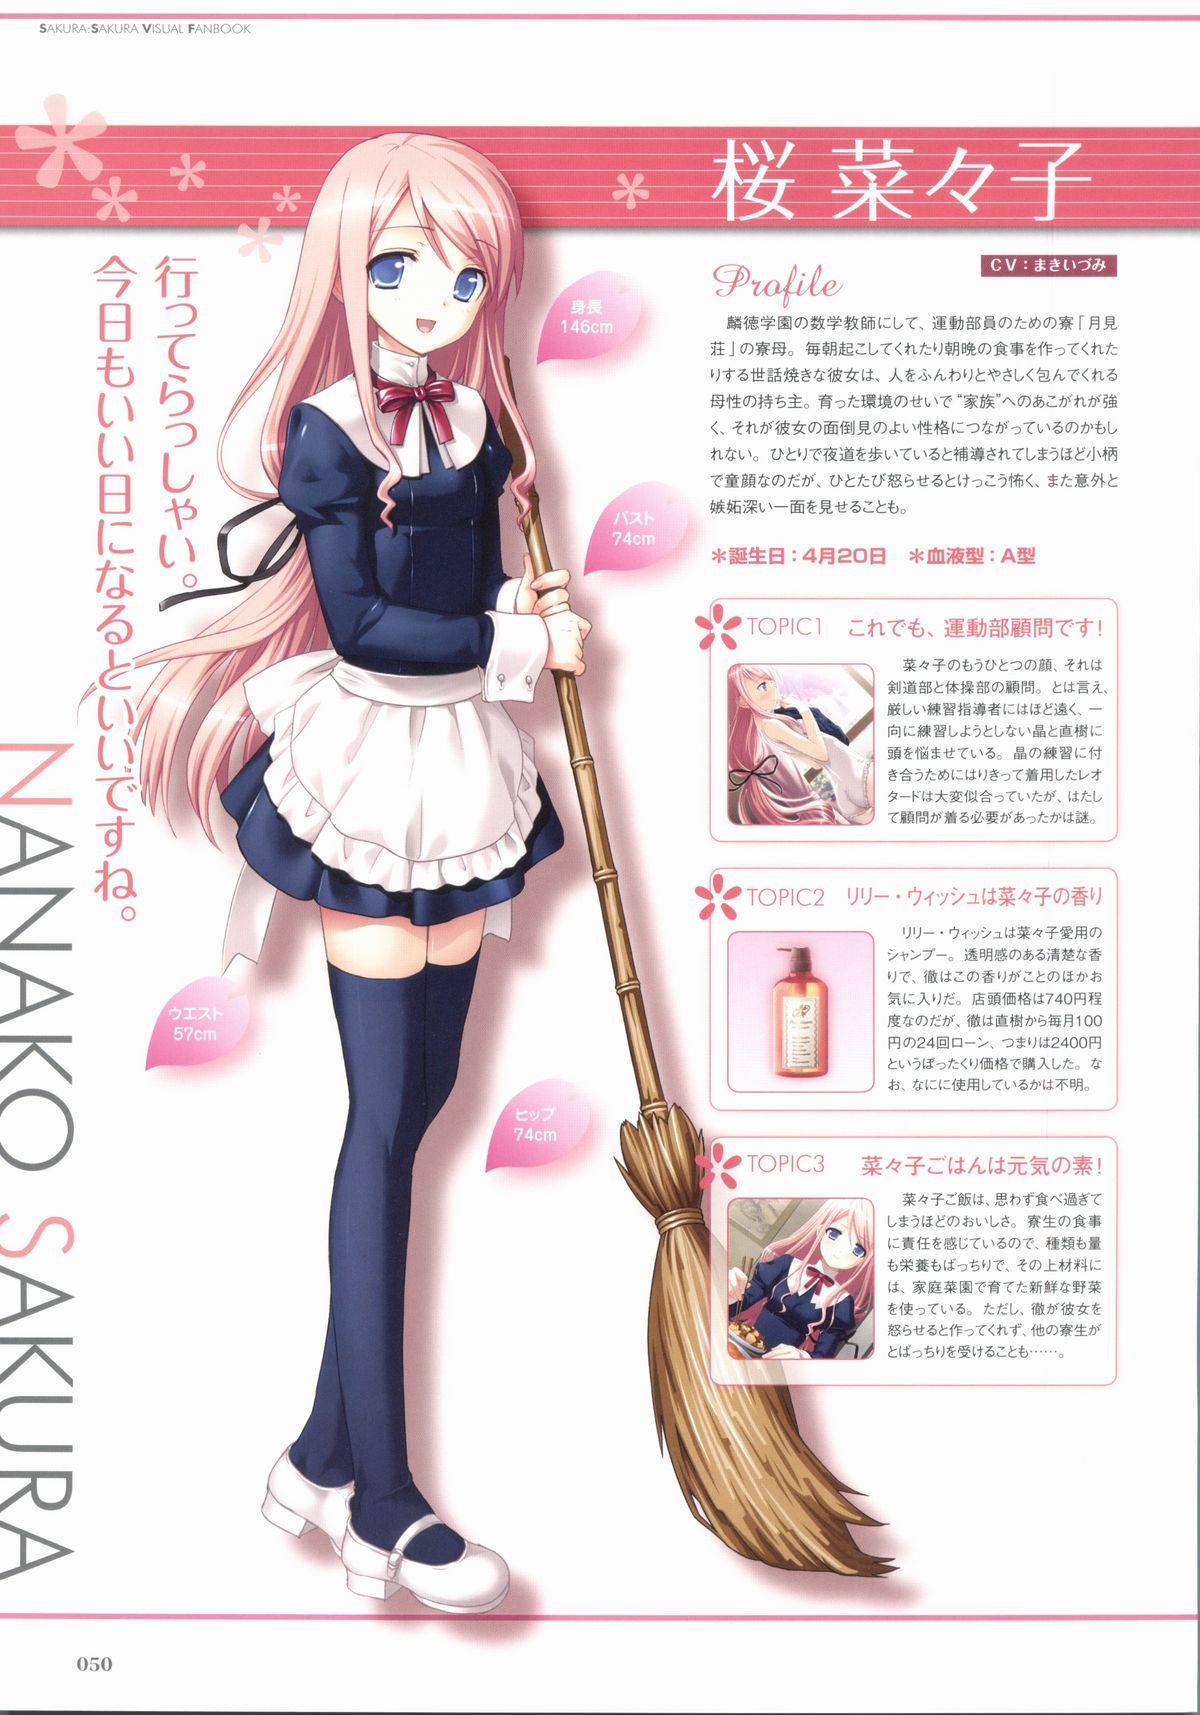 Sakura Sakura Visual Fan Book 54